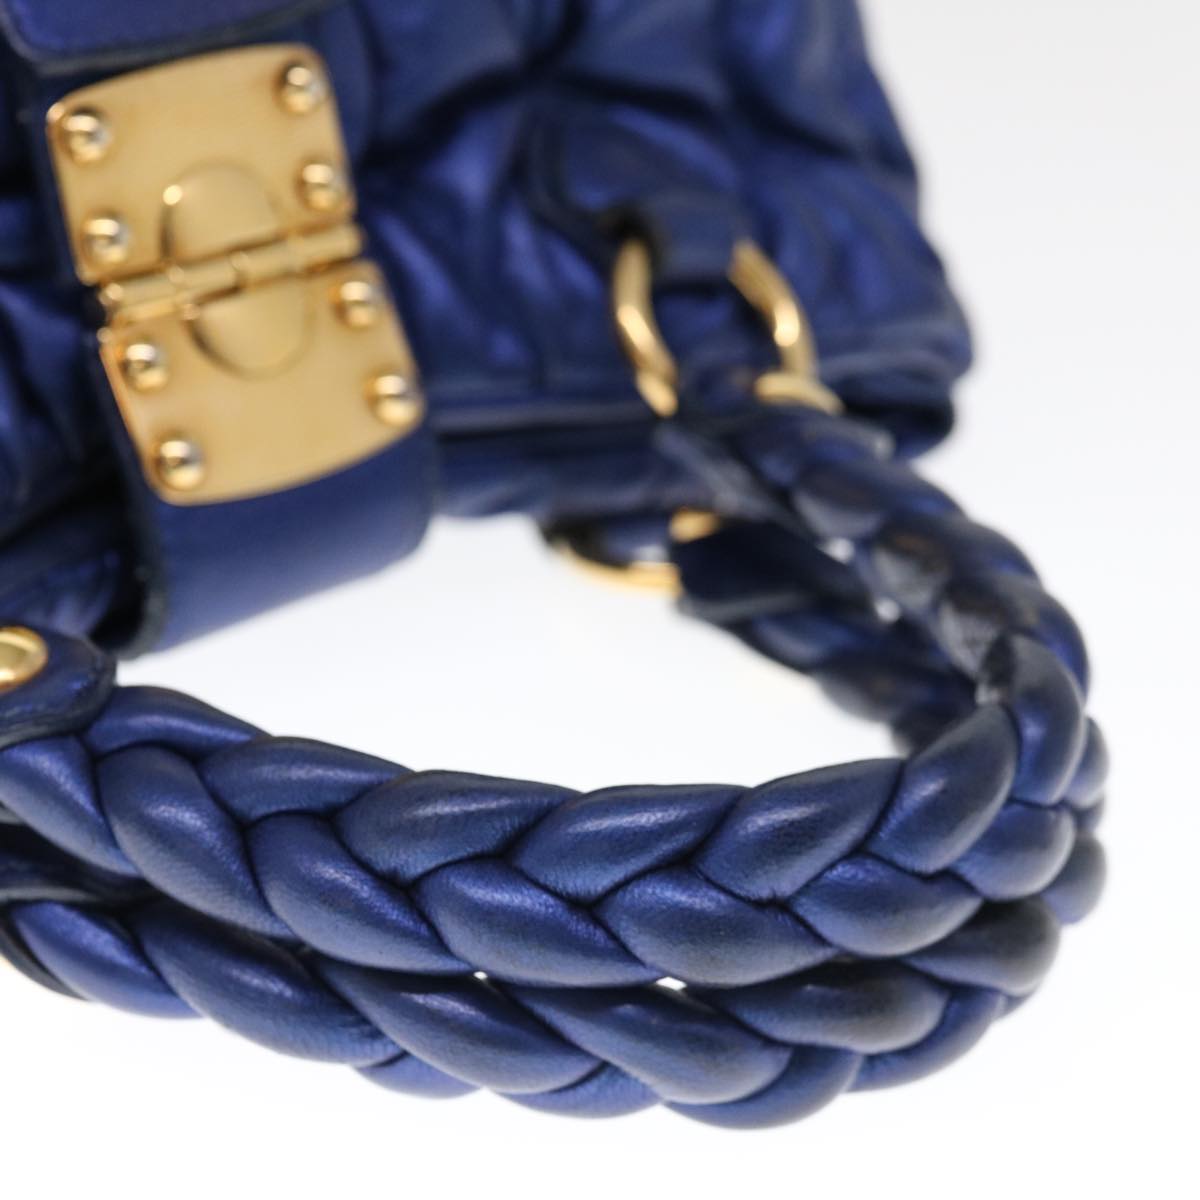 Miu Miu Materasse Shoulder Bag Leather 2way Blue Auth yb492